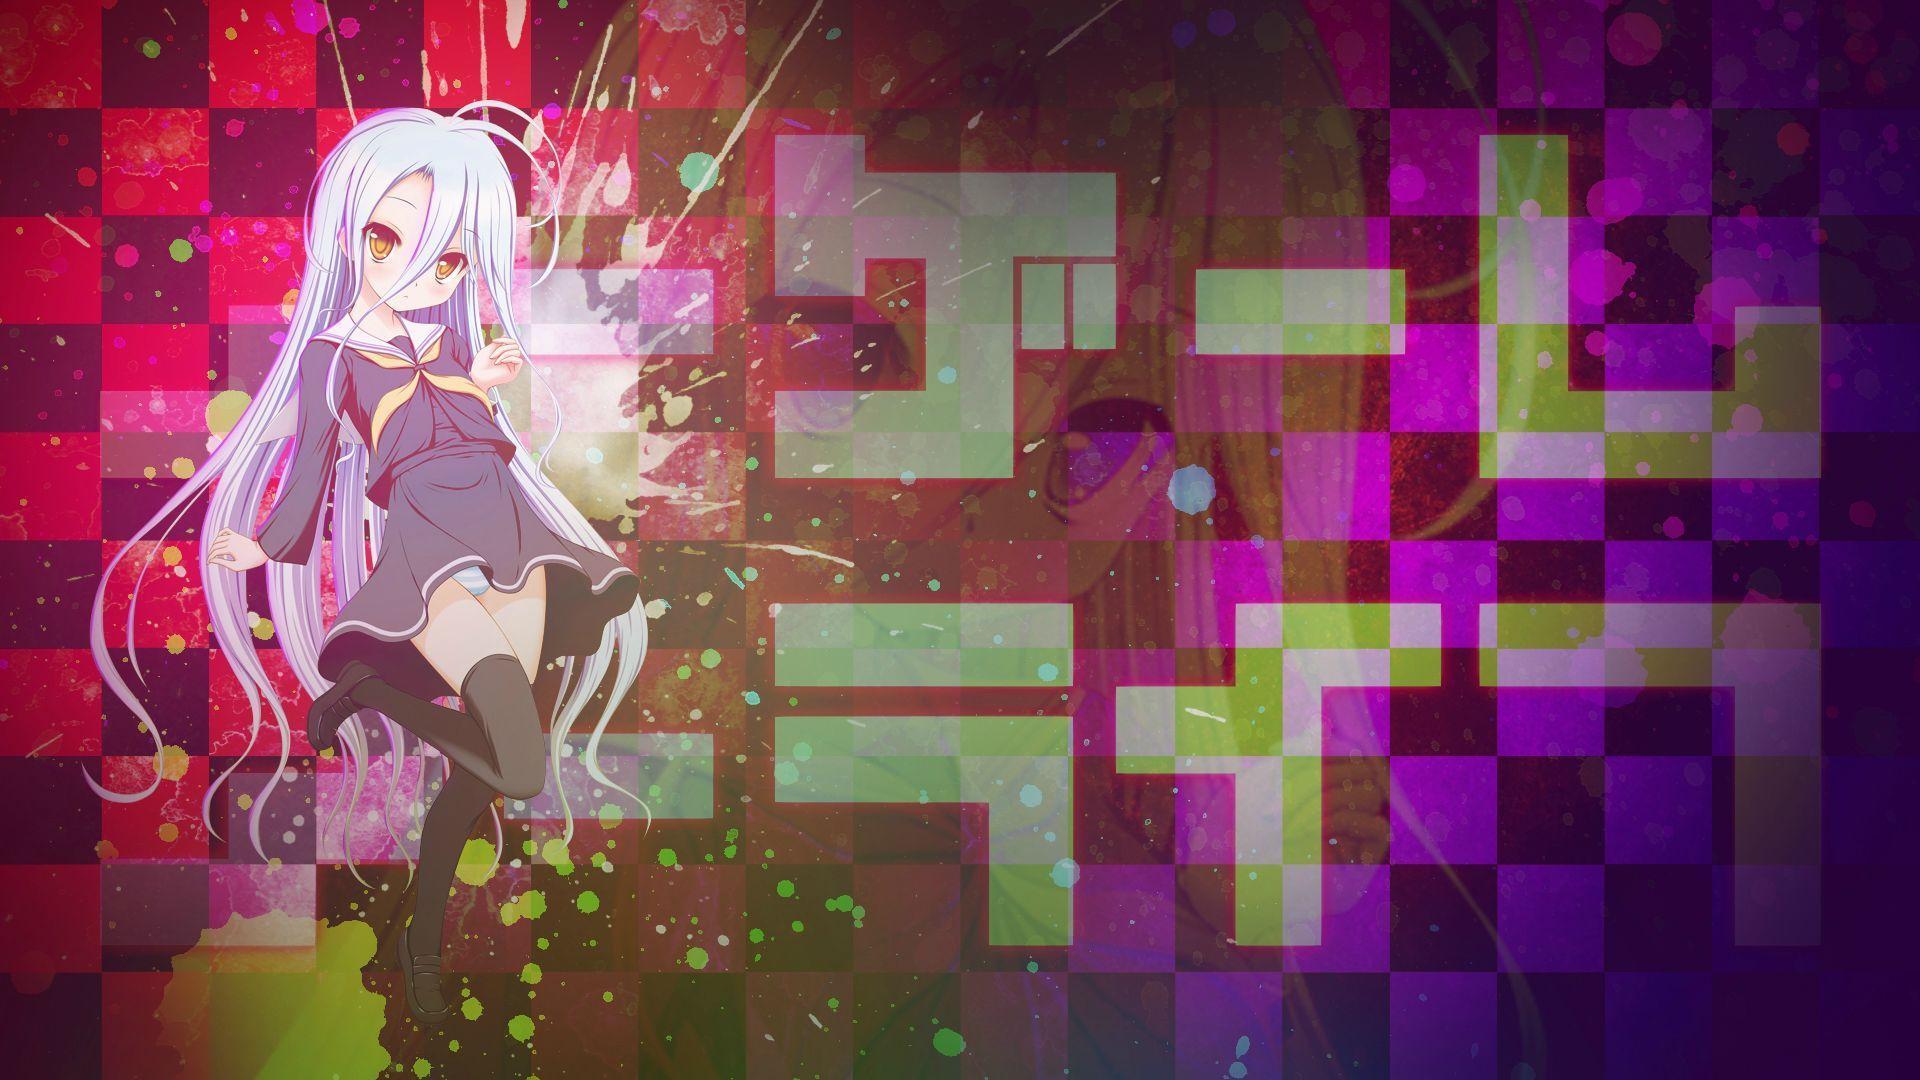 No Game No Life (anime) image Shiro HD wallpaper and background